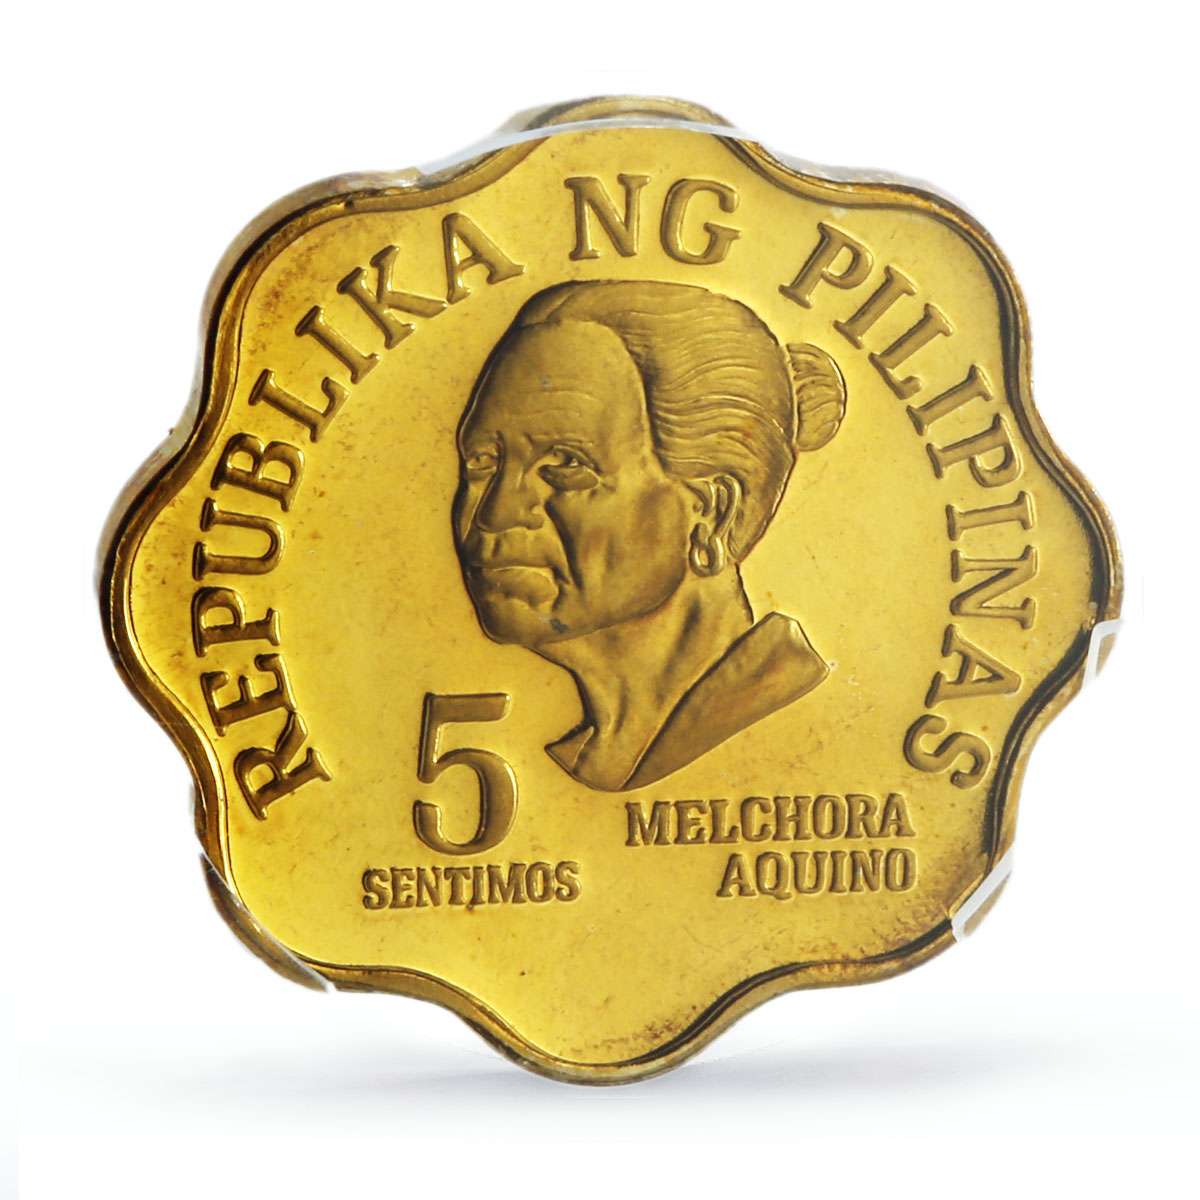 Philippines 5 sentimos Melchora Aquino Politics KM-225 PR68 PCGS brass coin 1981